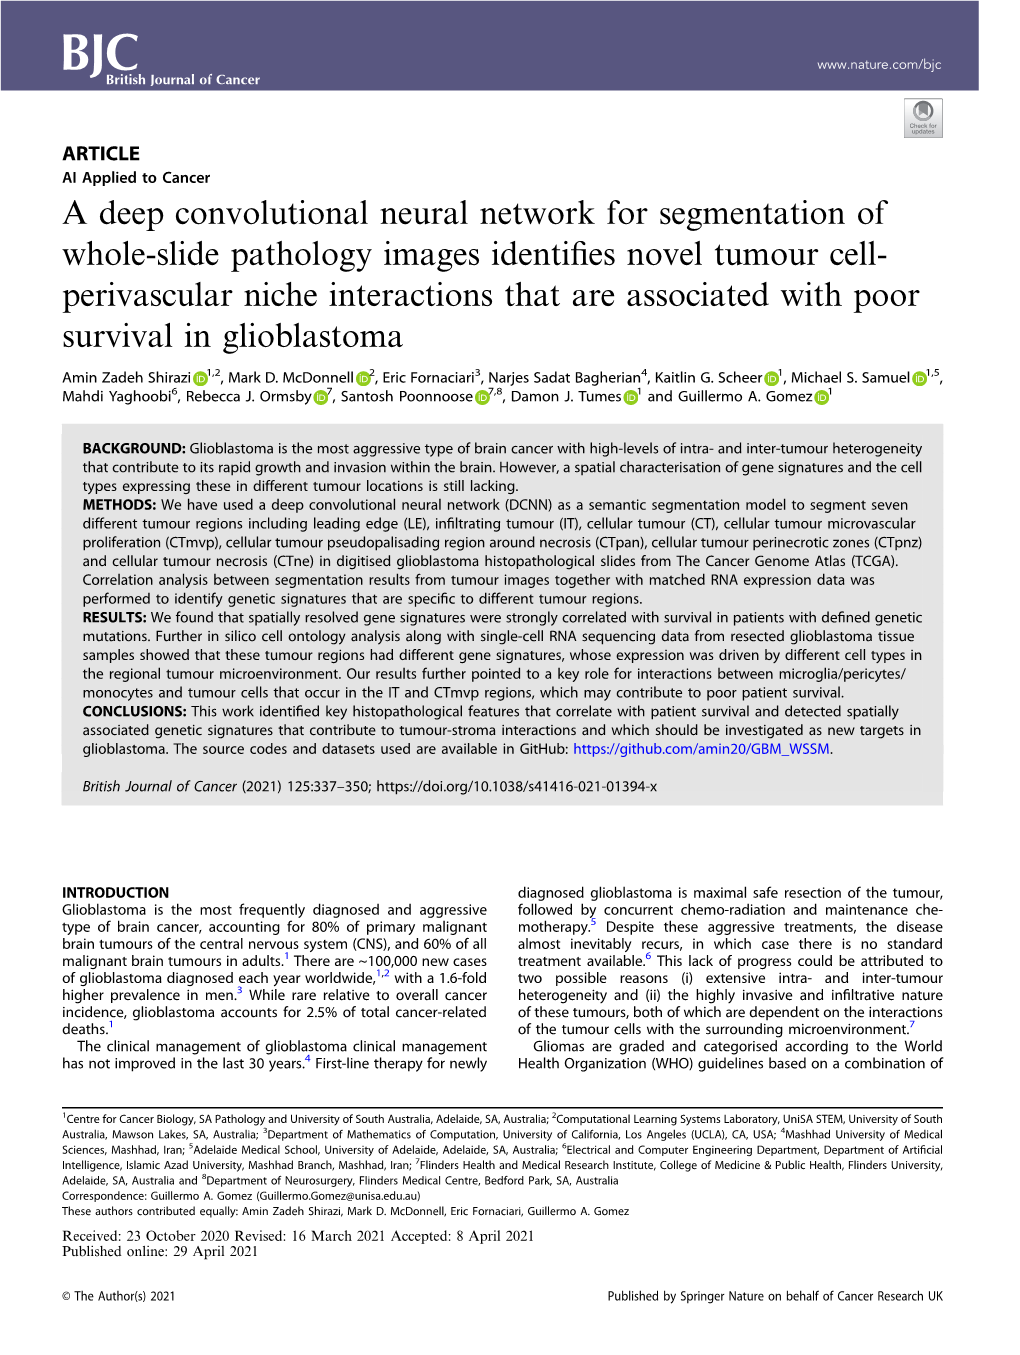 A Deep Convolutional Neural Network for Segmentation of Whole-Slide